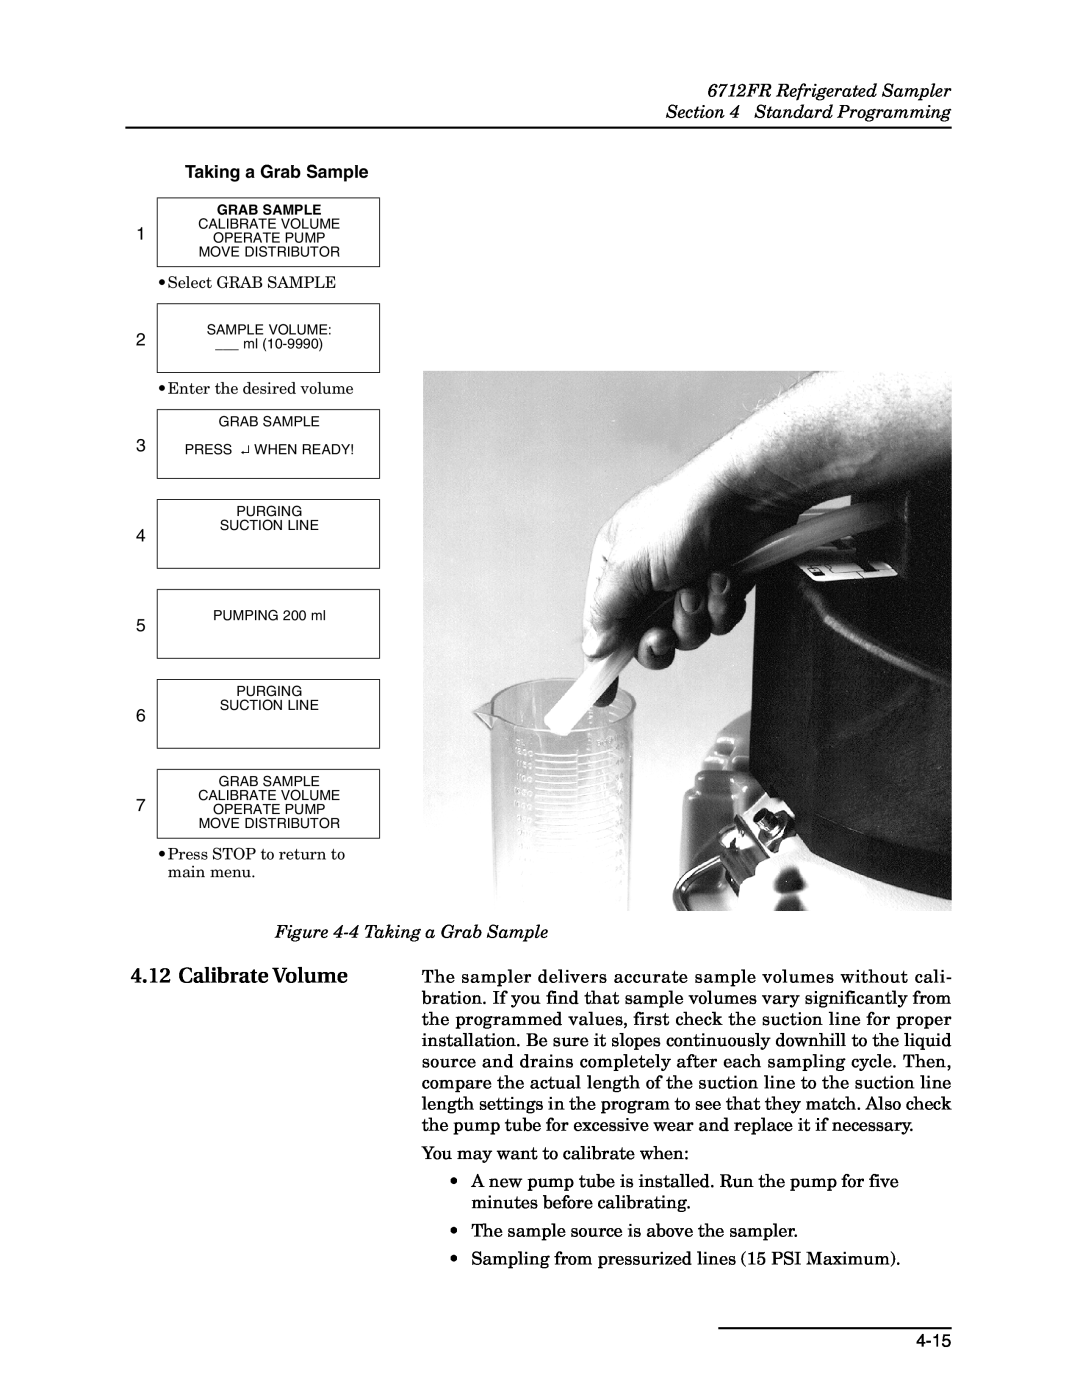 Teledyne manual Calibrate Volume, 6712FR Refrigerated Sampler Standard Programming, Taking a Grab Sample 